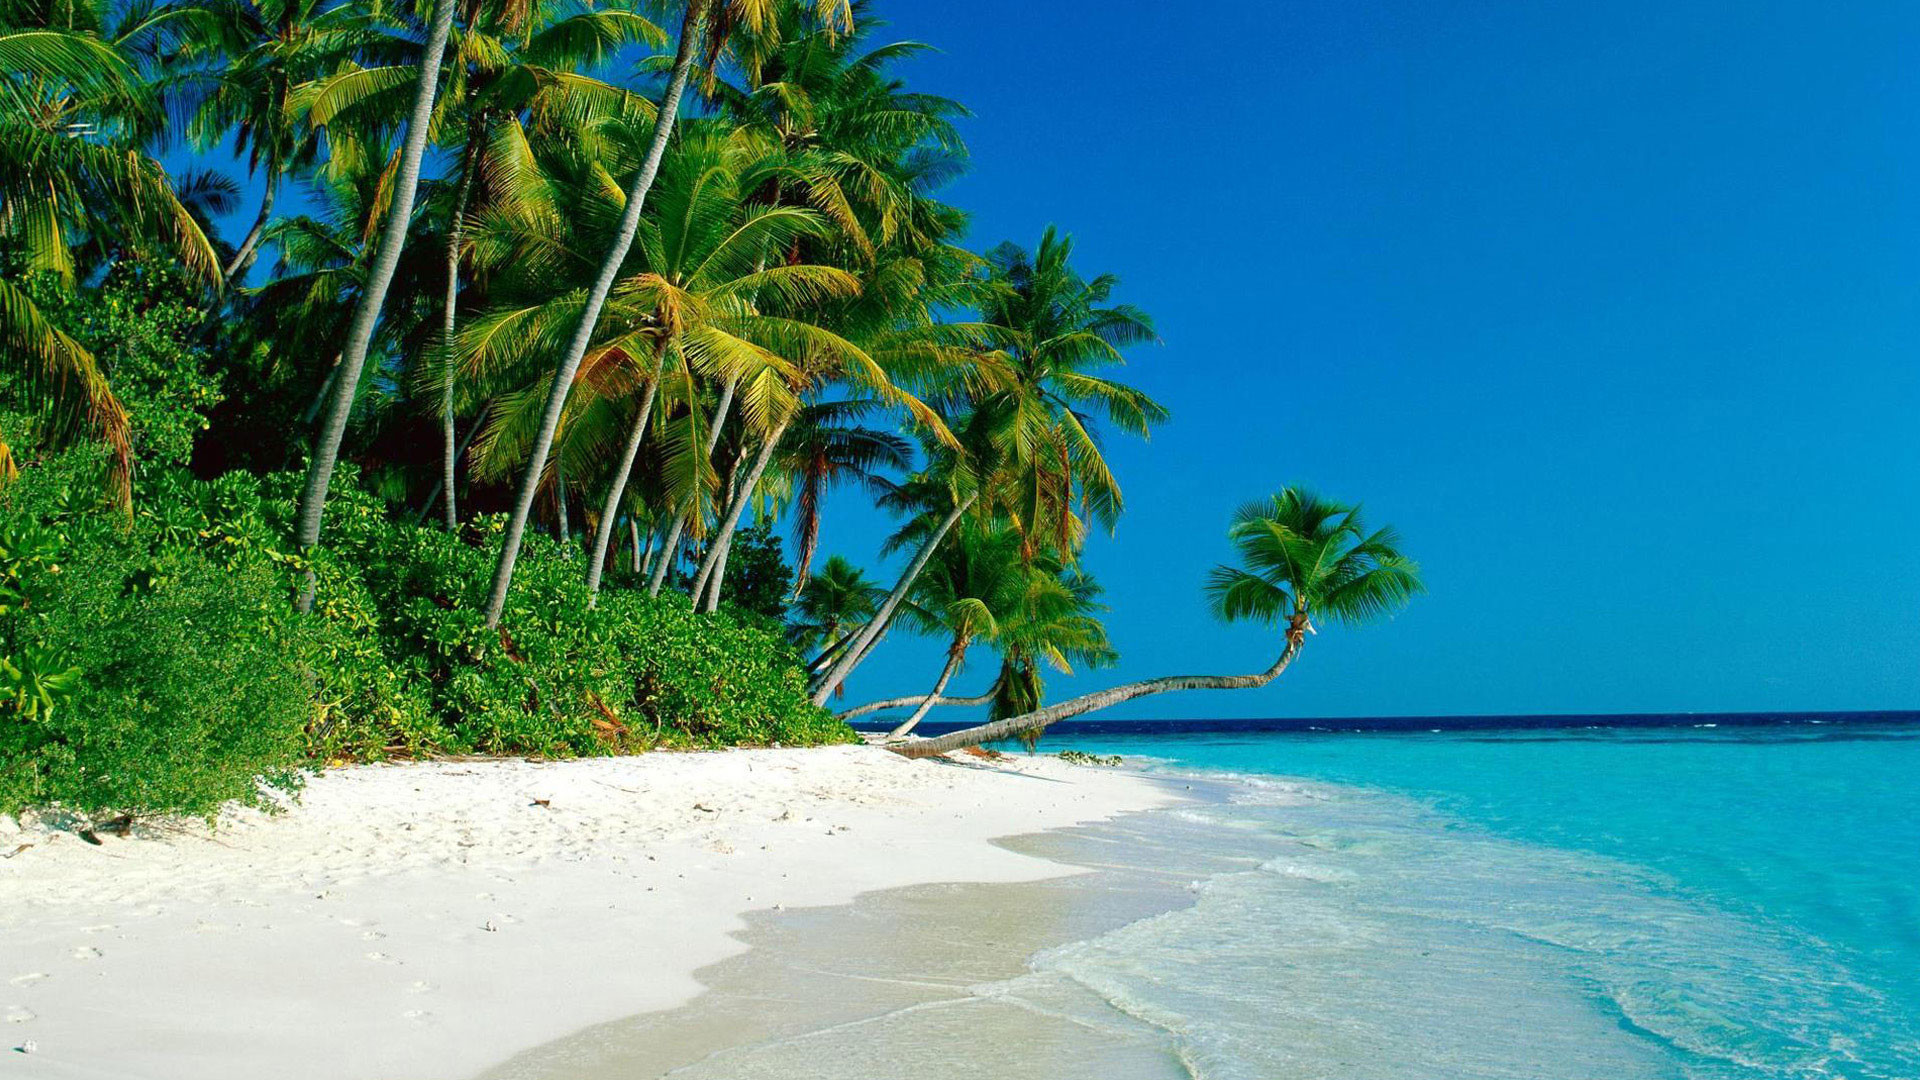 Hd pics photos awesome beautiful beach blue sea coconut tree hd quality desktop background wallpaper